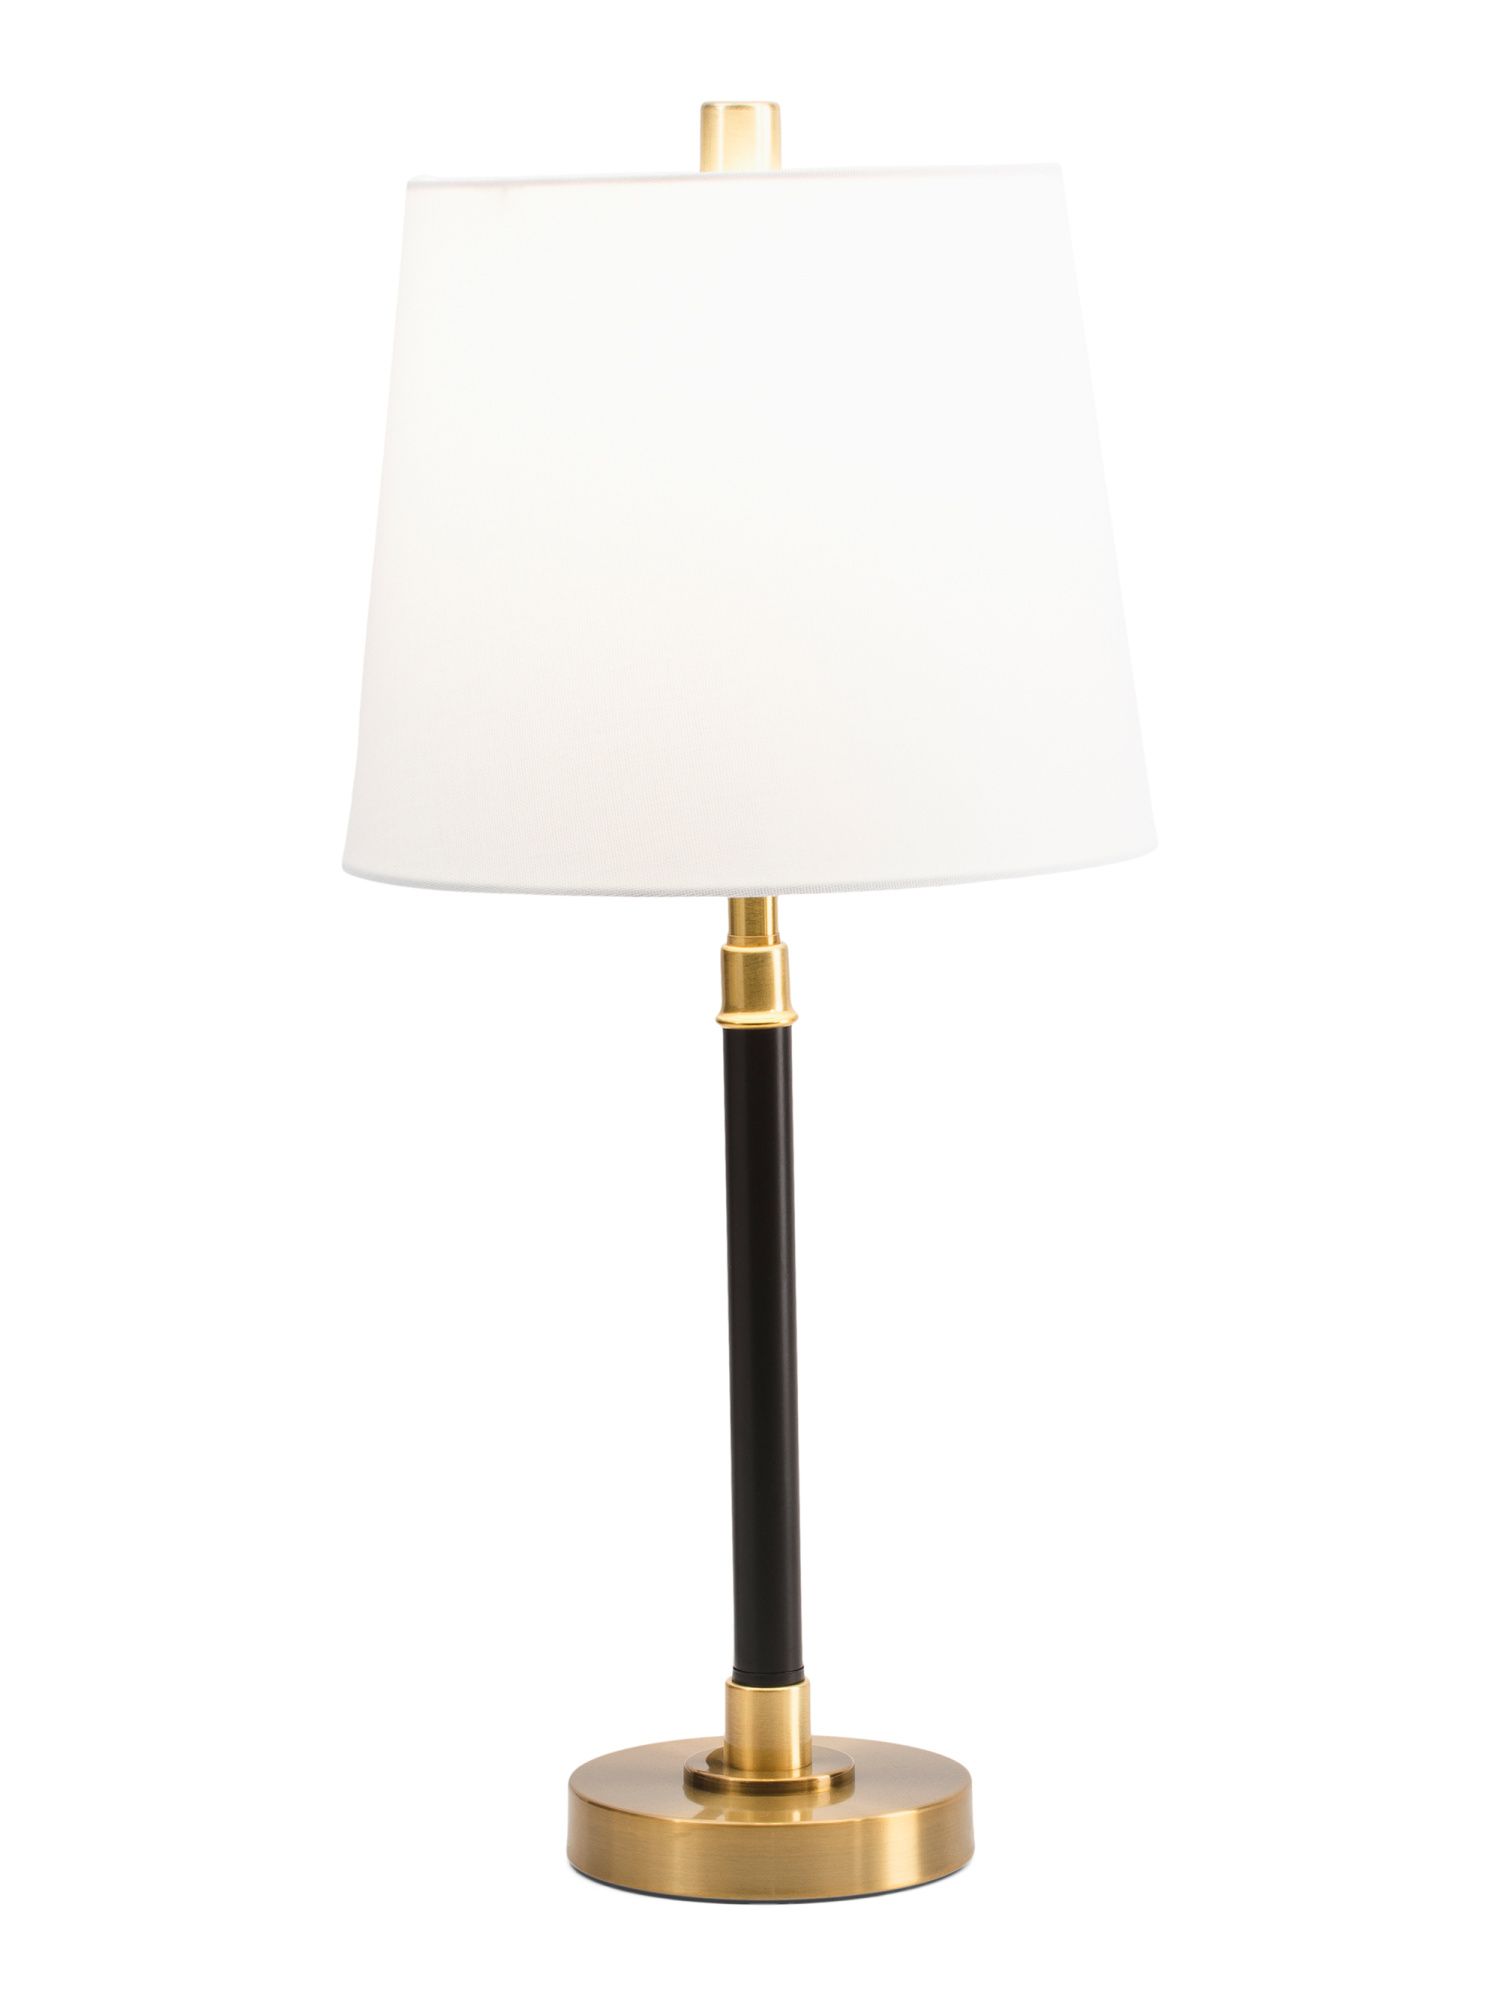 21in Vitale Table Lamp | TJ Maxx